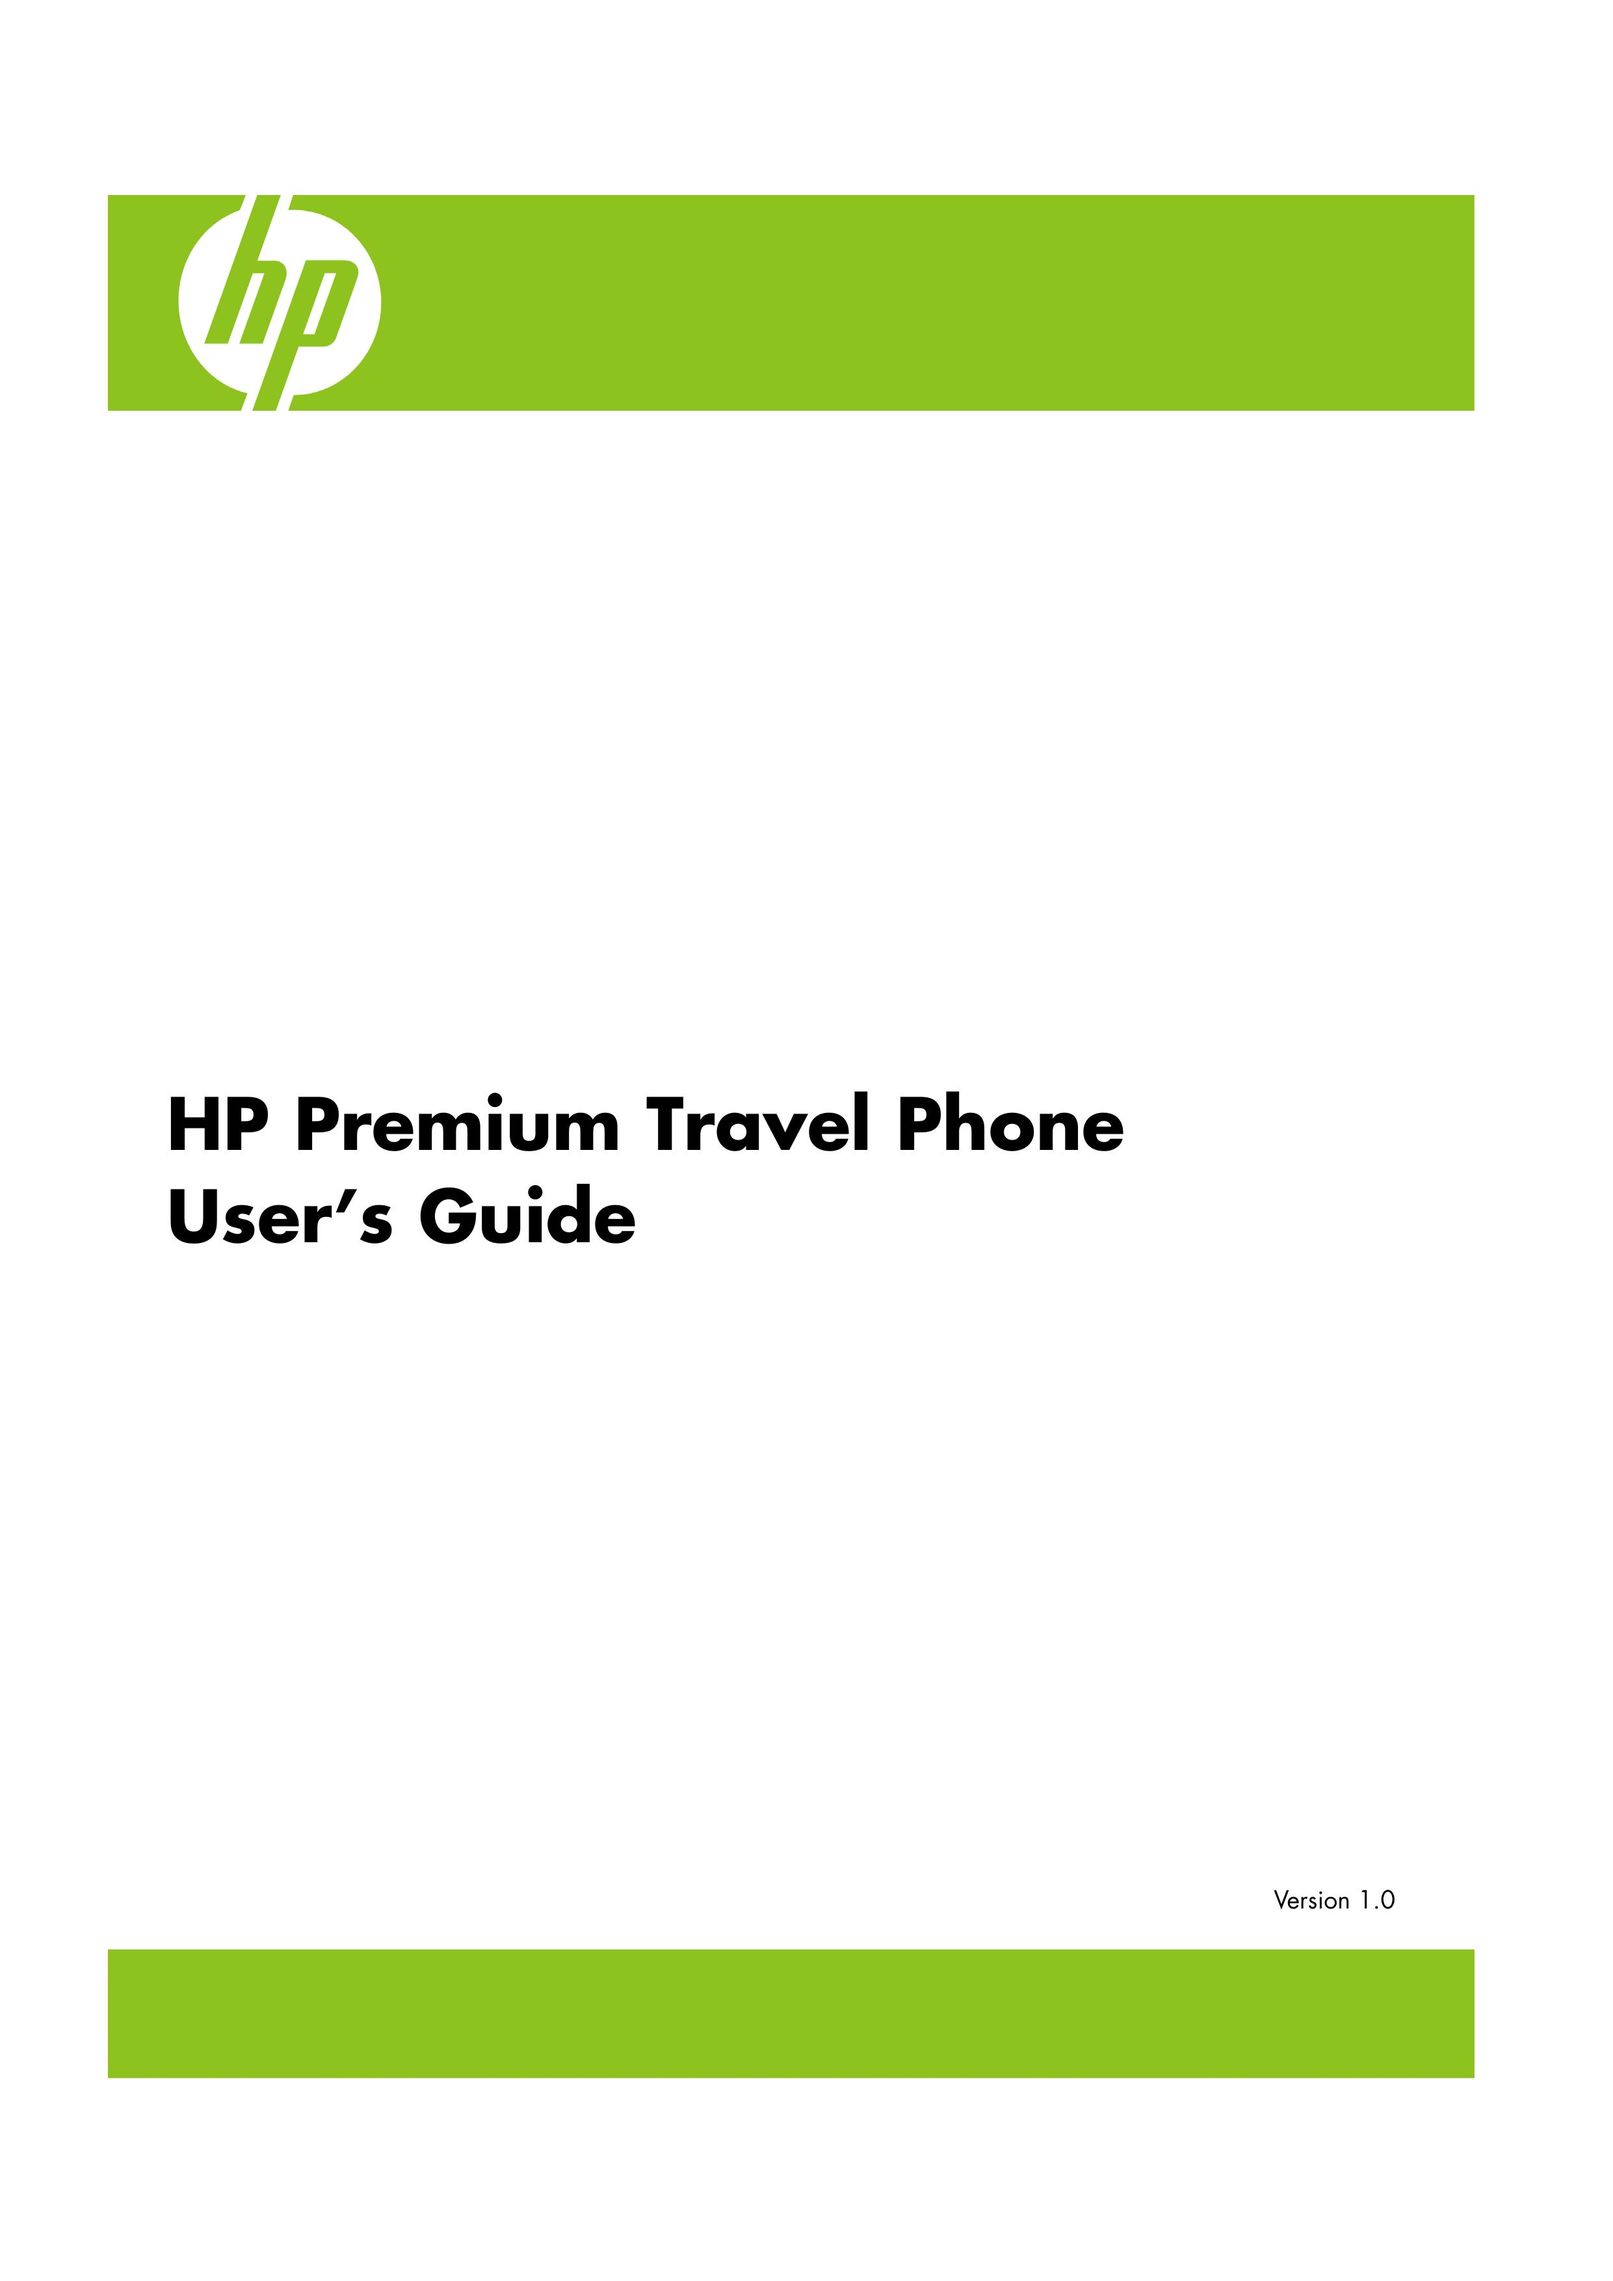 HP (Hewlett-Packard) Premium Travel Phone Telephone User Manual